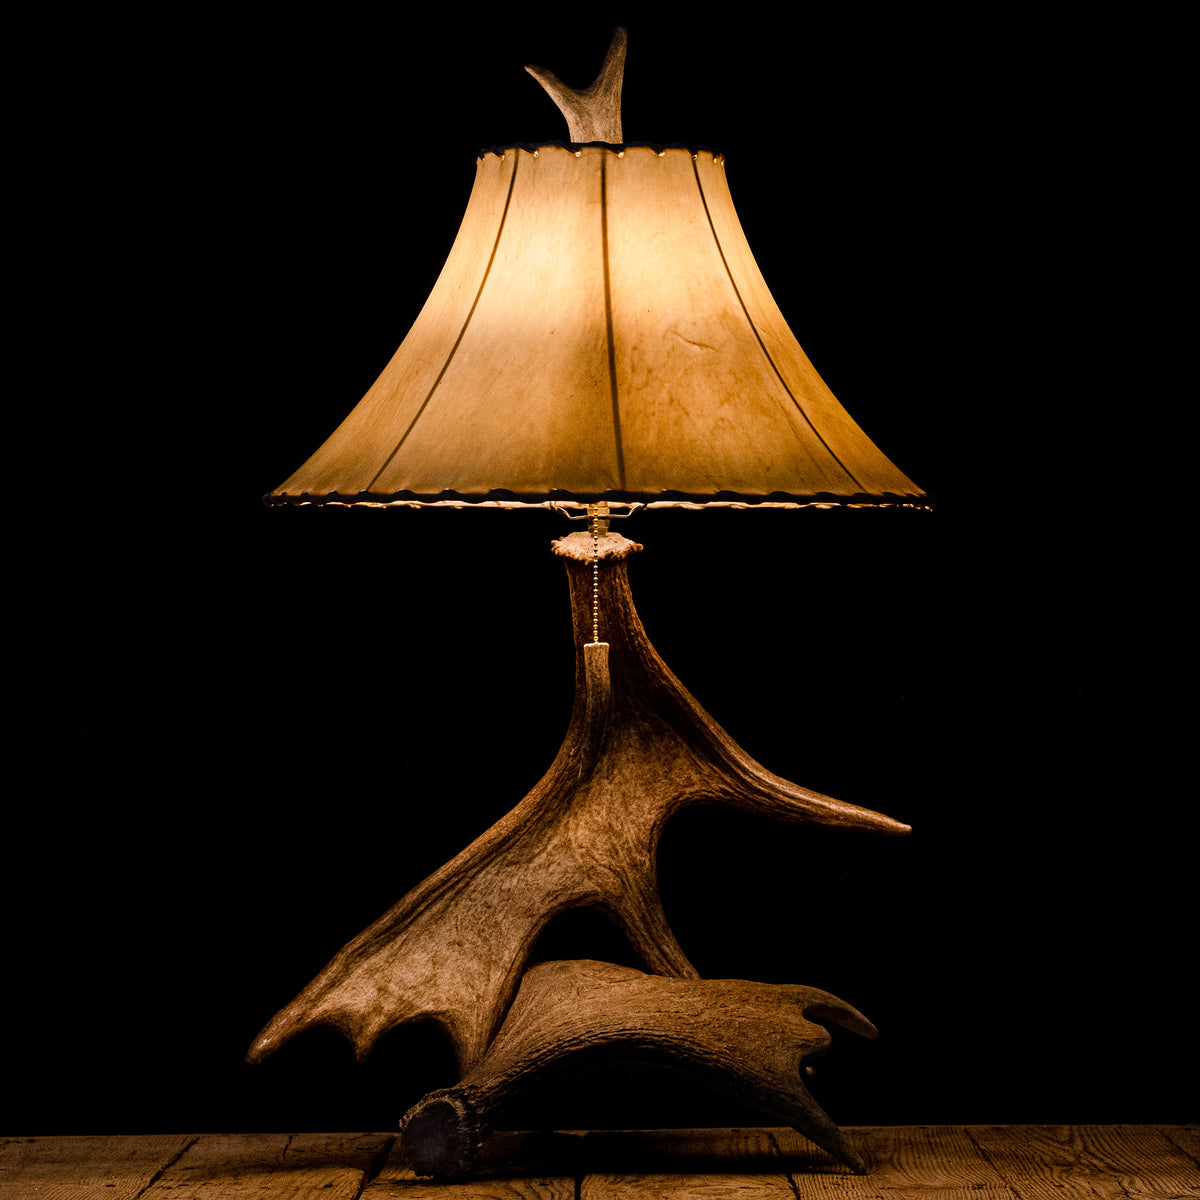 Real Moose Shed Antler Lamp - Rustic Lighting Antler Decor for Loghome, Living Room, Man Cave